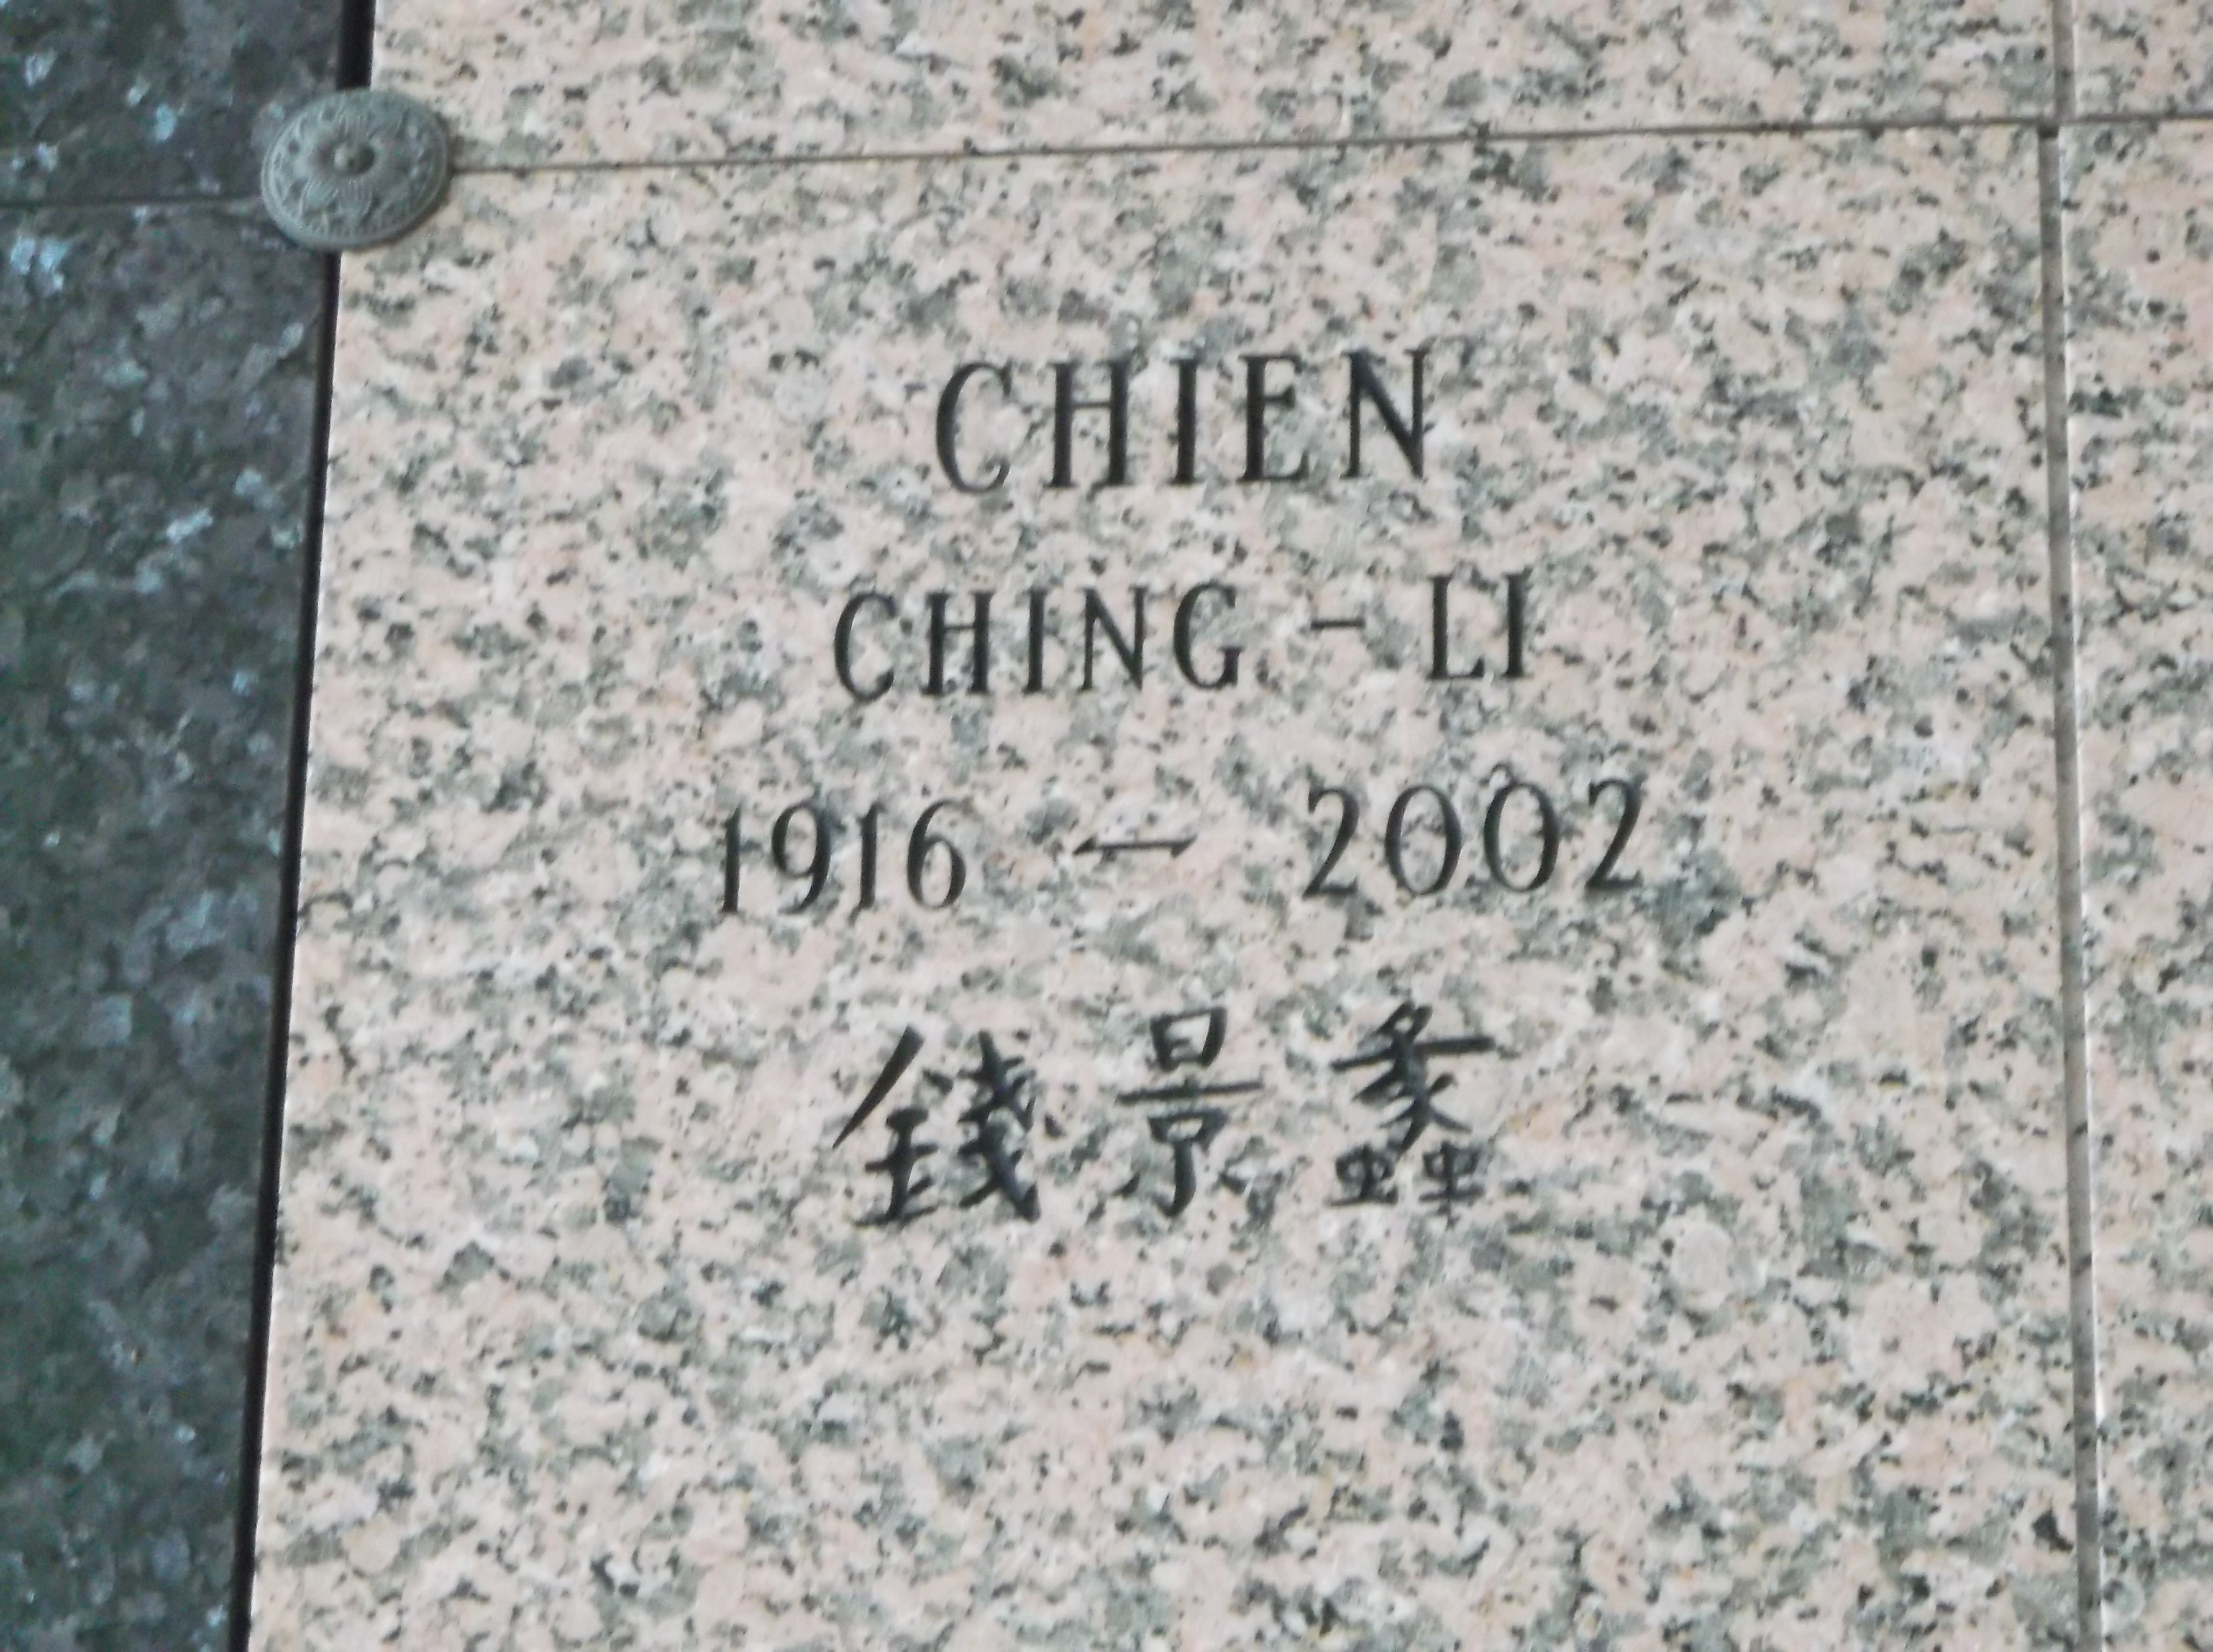 Ching-Li Chien